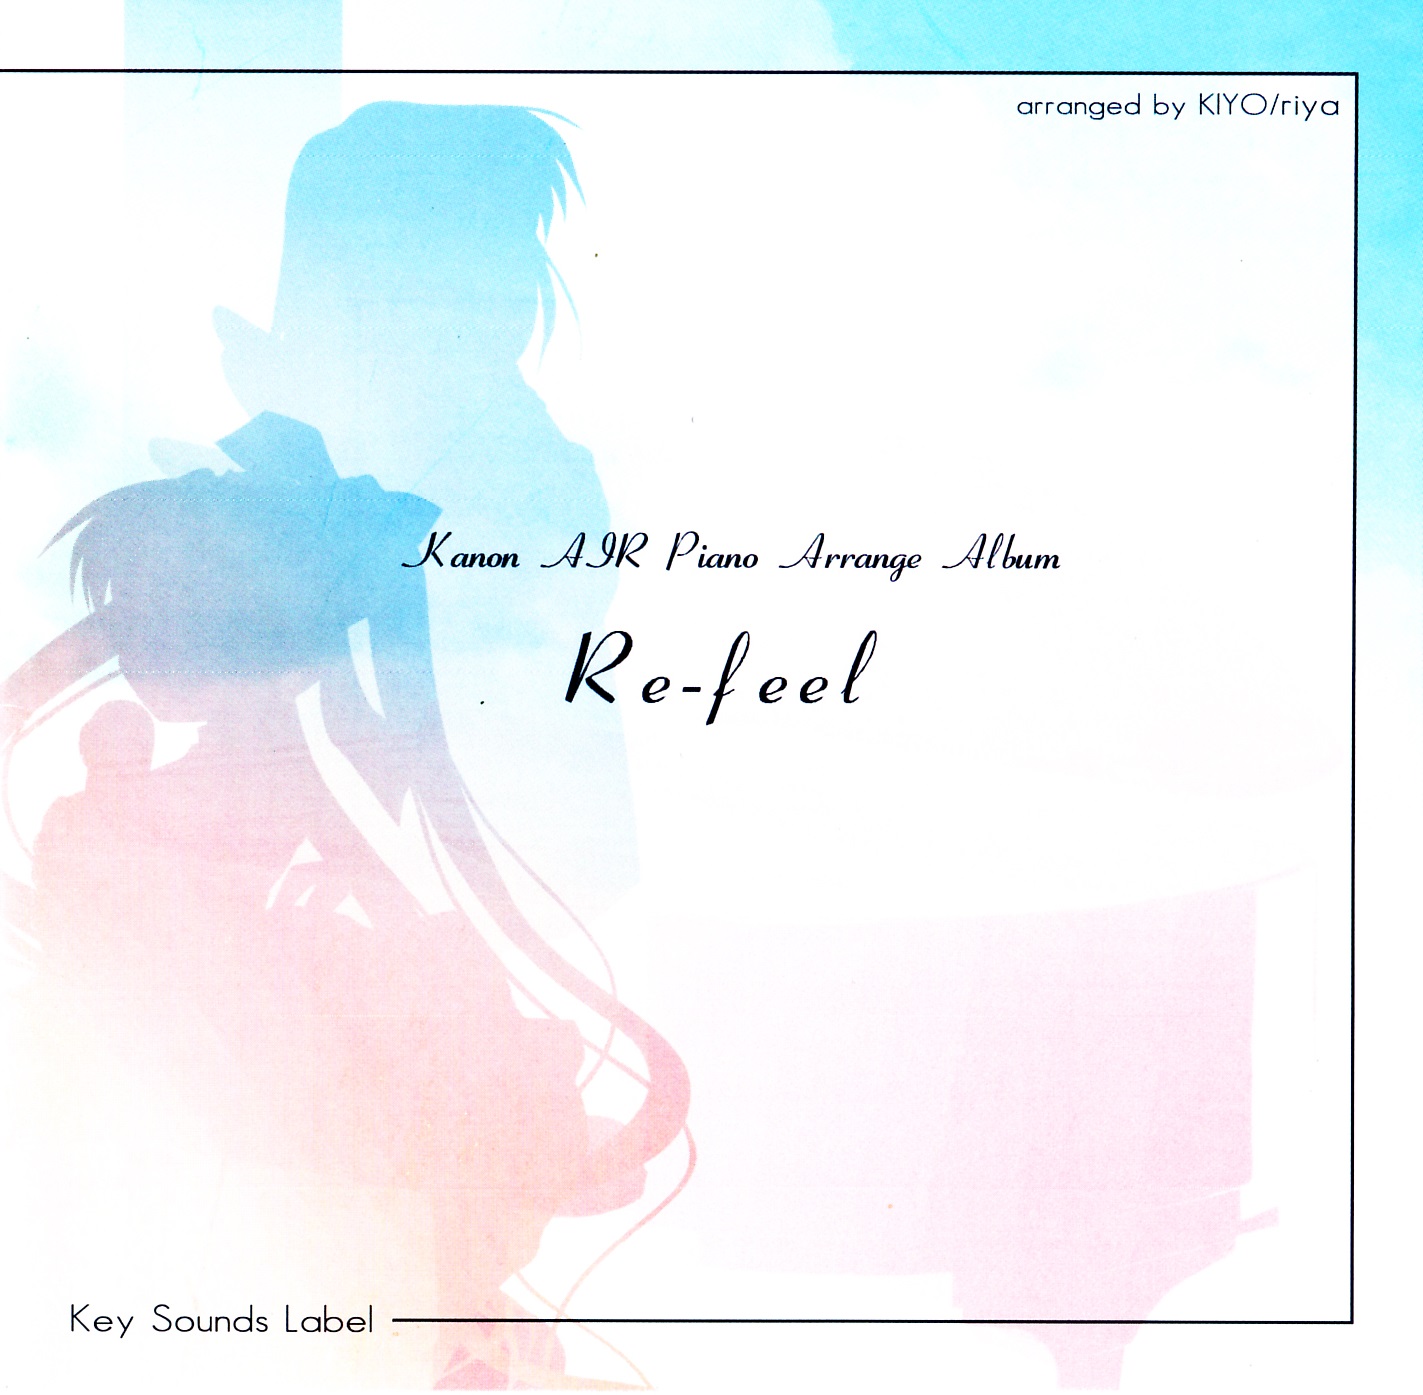 Release “Kanon AIR Piano Arrange Album Re-feel” by Various Artists -  MusicBrainz